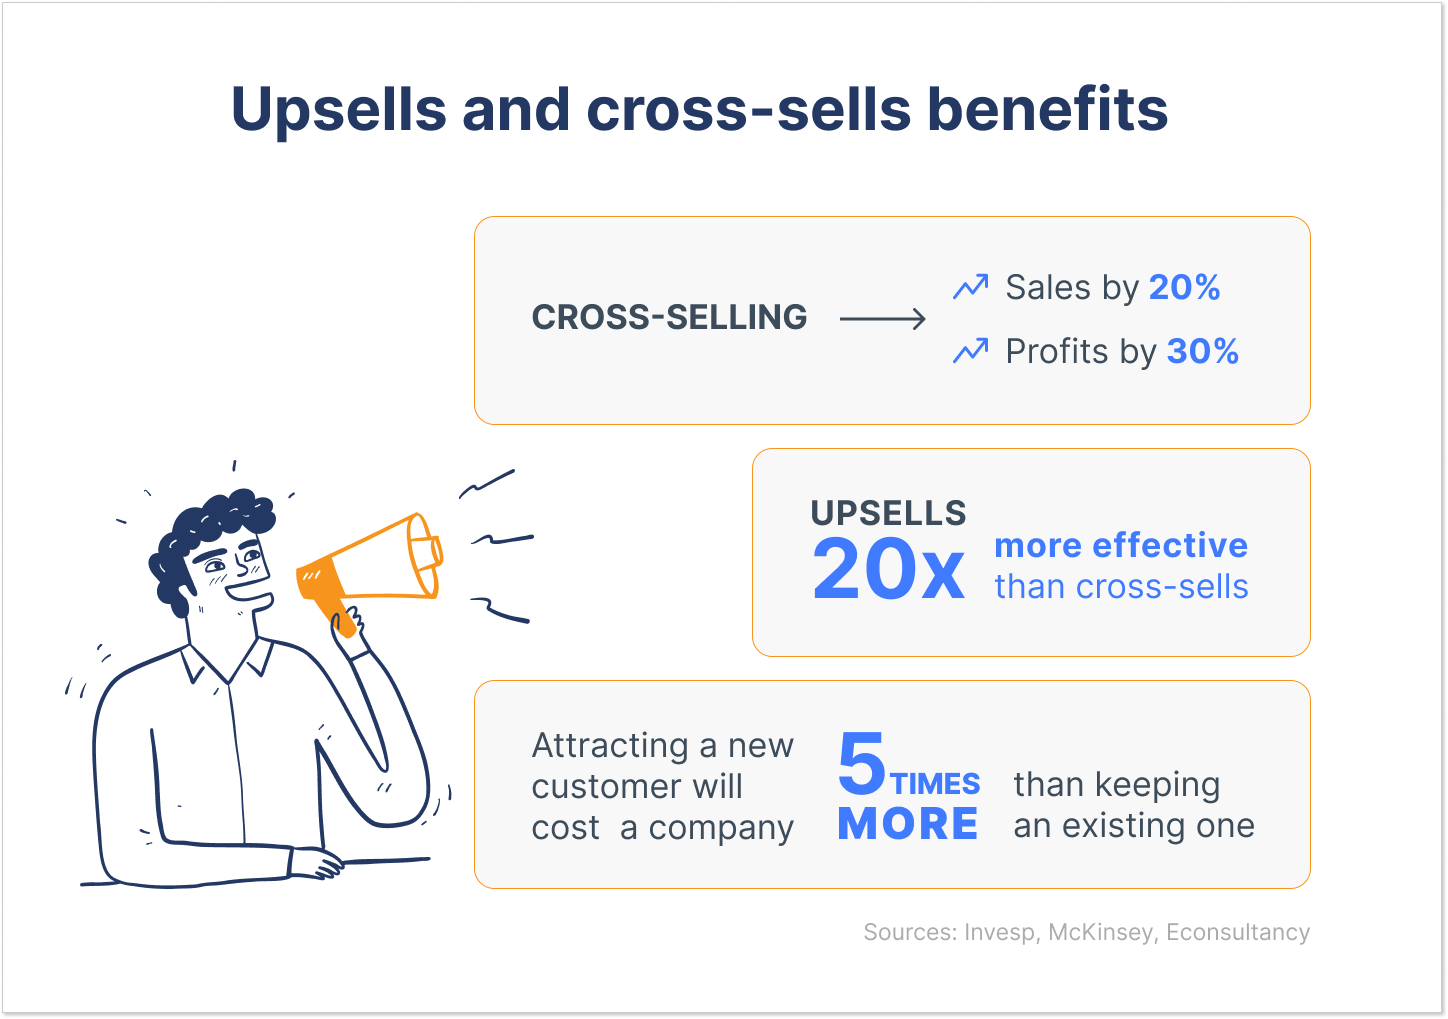 Upsells and cross-sells benefits